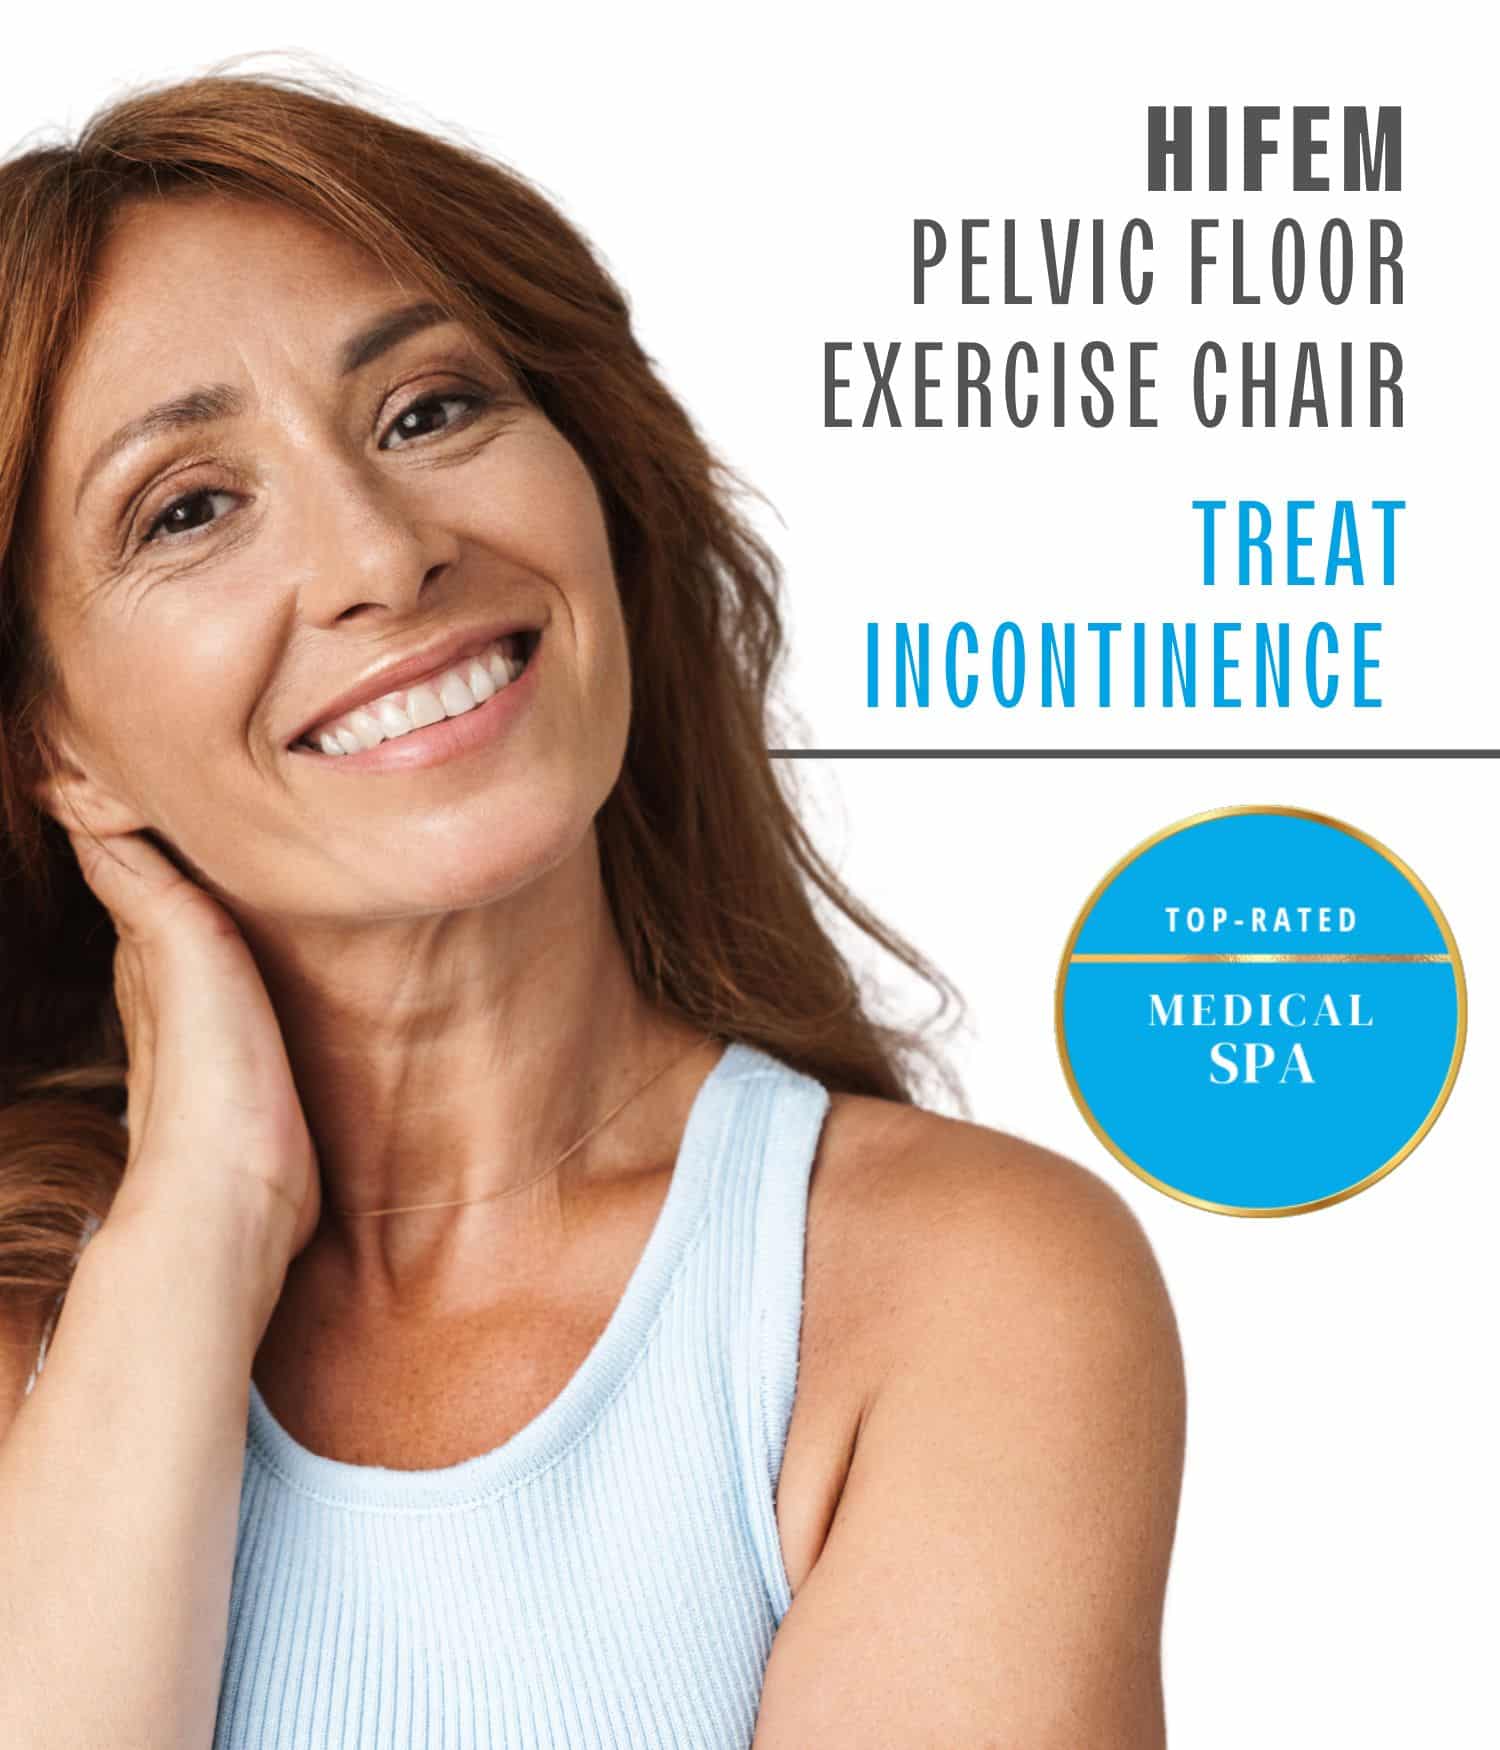 A woman smiling, HIFEM Pelvic Floor Exercise Chair.